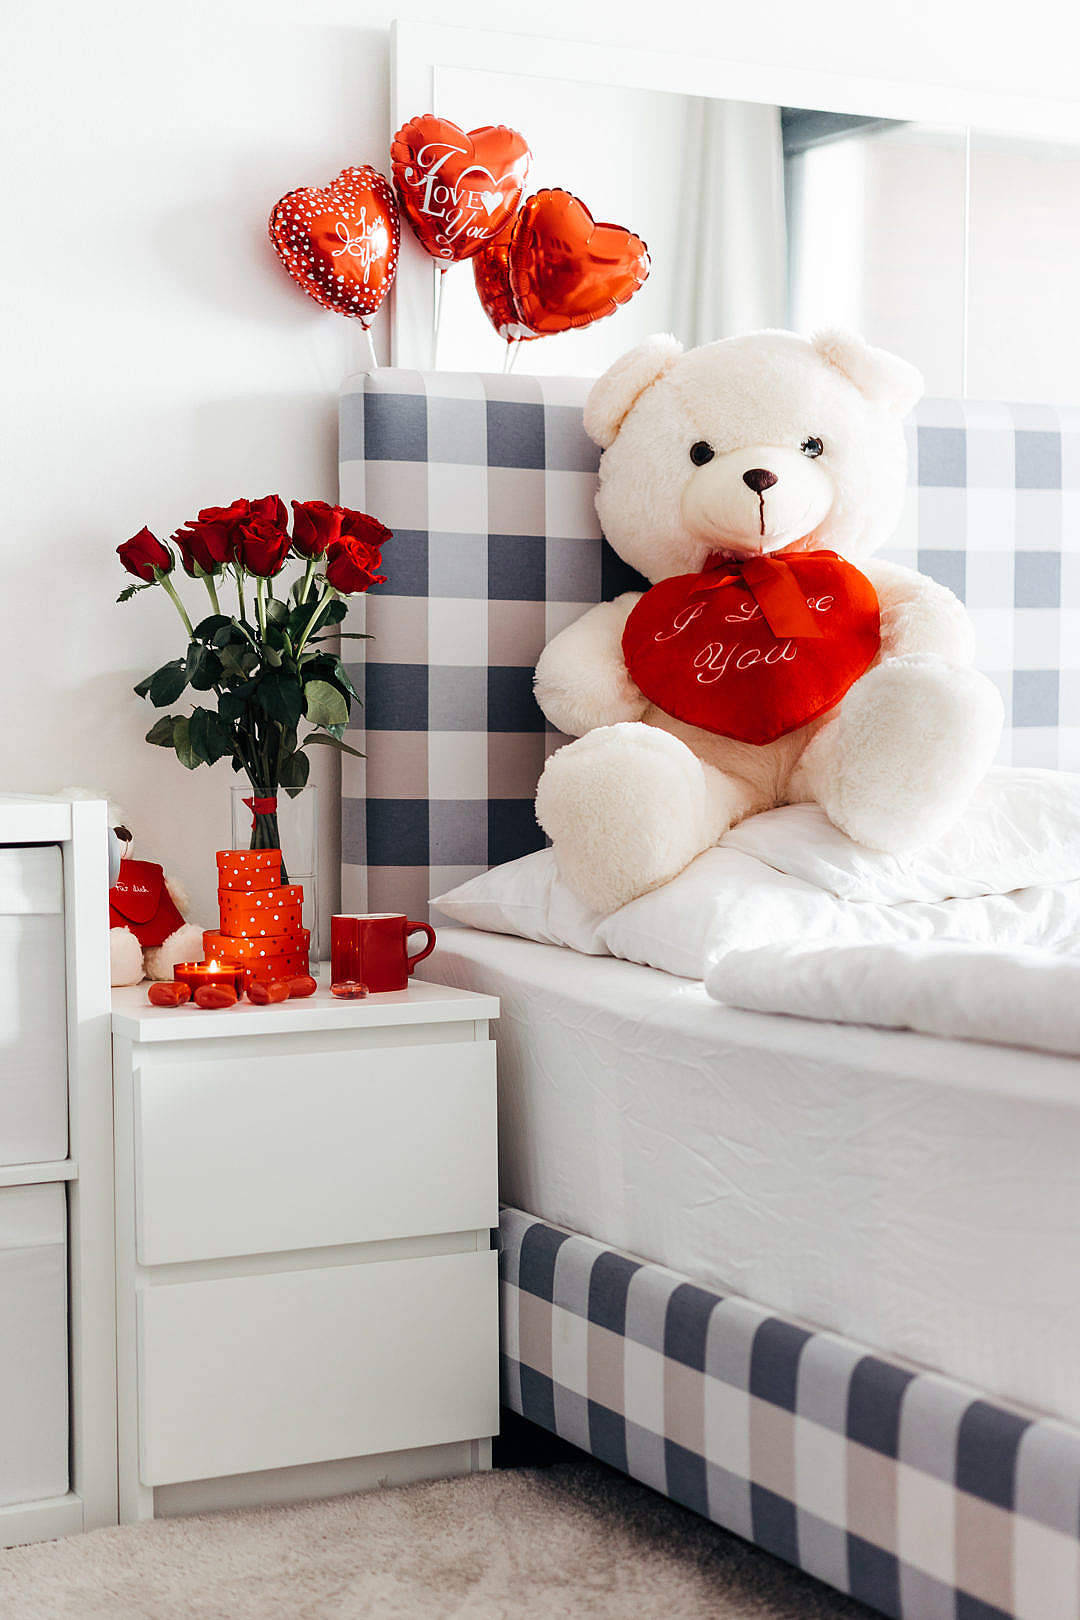 Romantic Love Flowers Red Roses In Vase Wallpaper